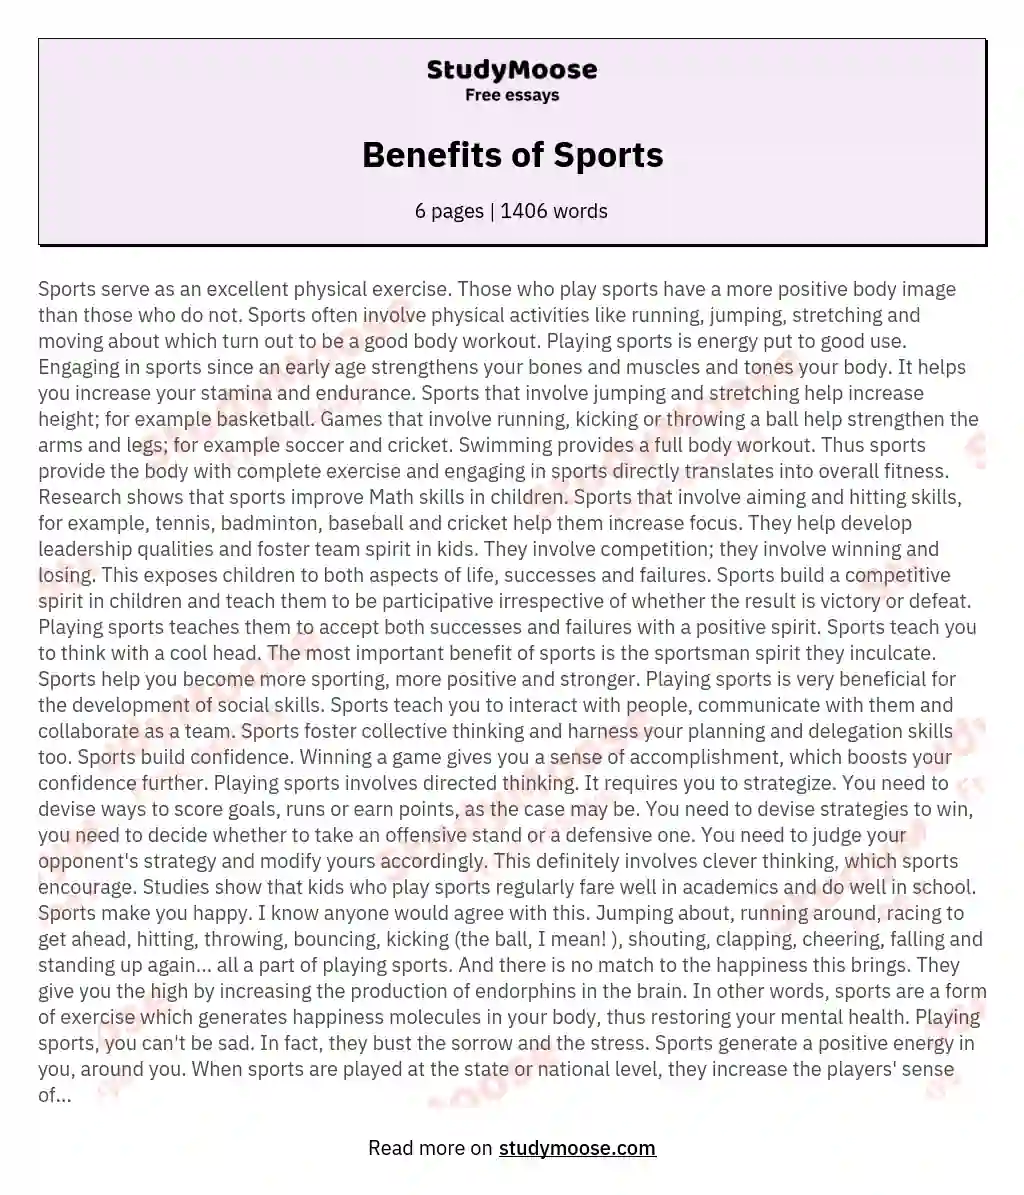 Benefits of Sports essay